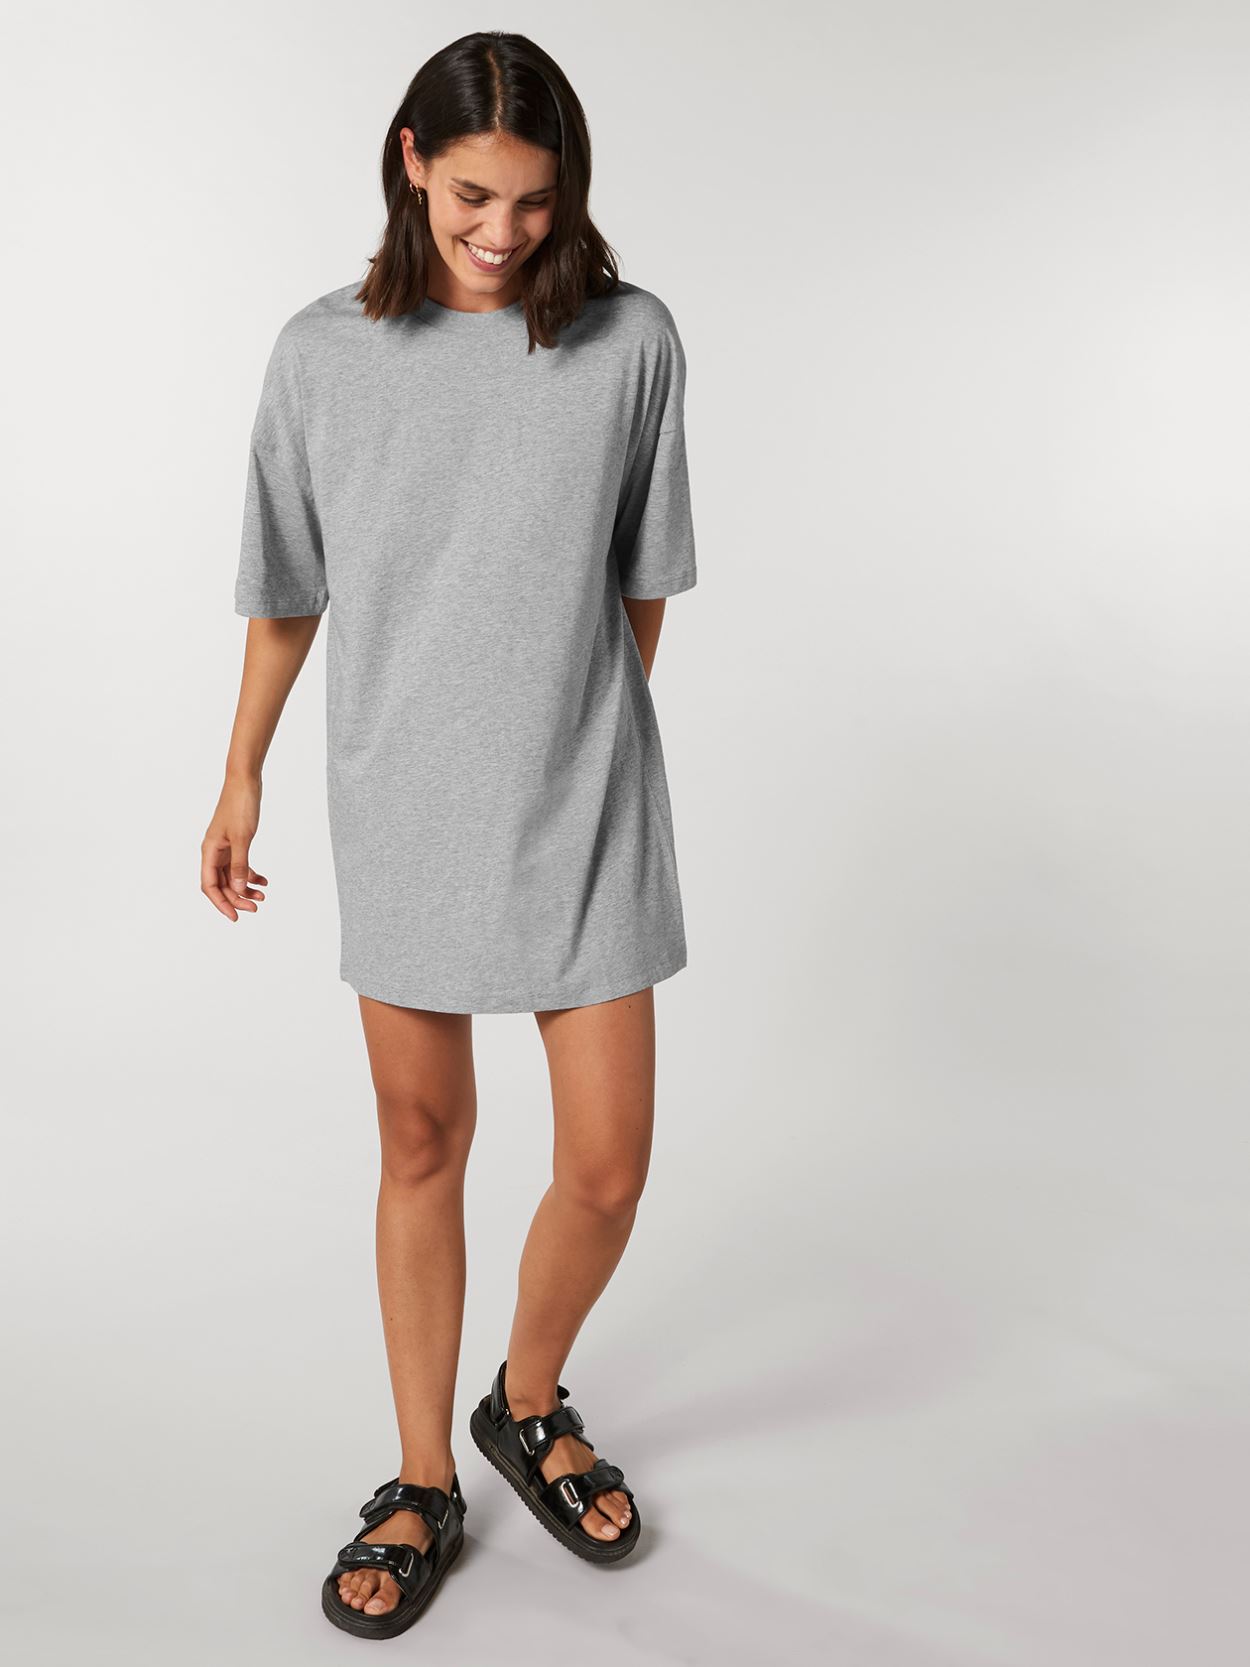 SX103 Twister, The Women's Oversized T-Shirt Dress Image 2